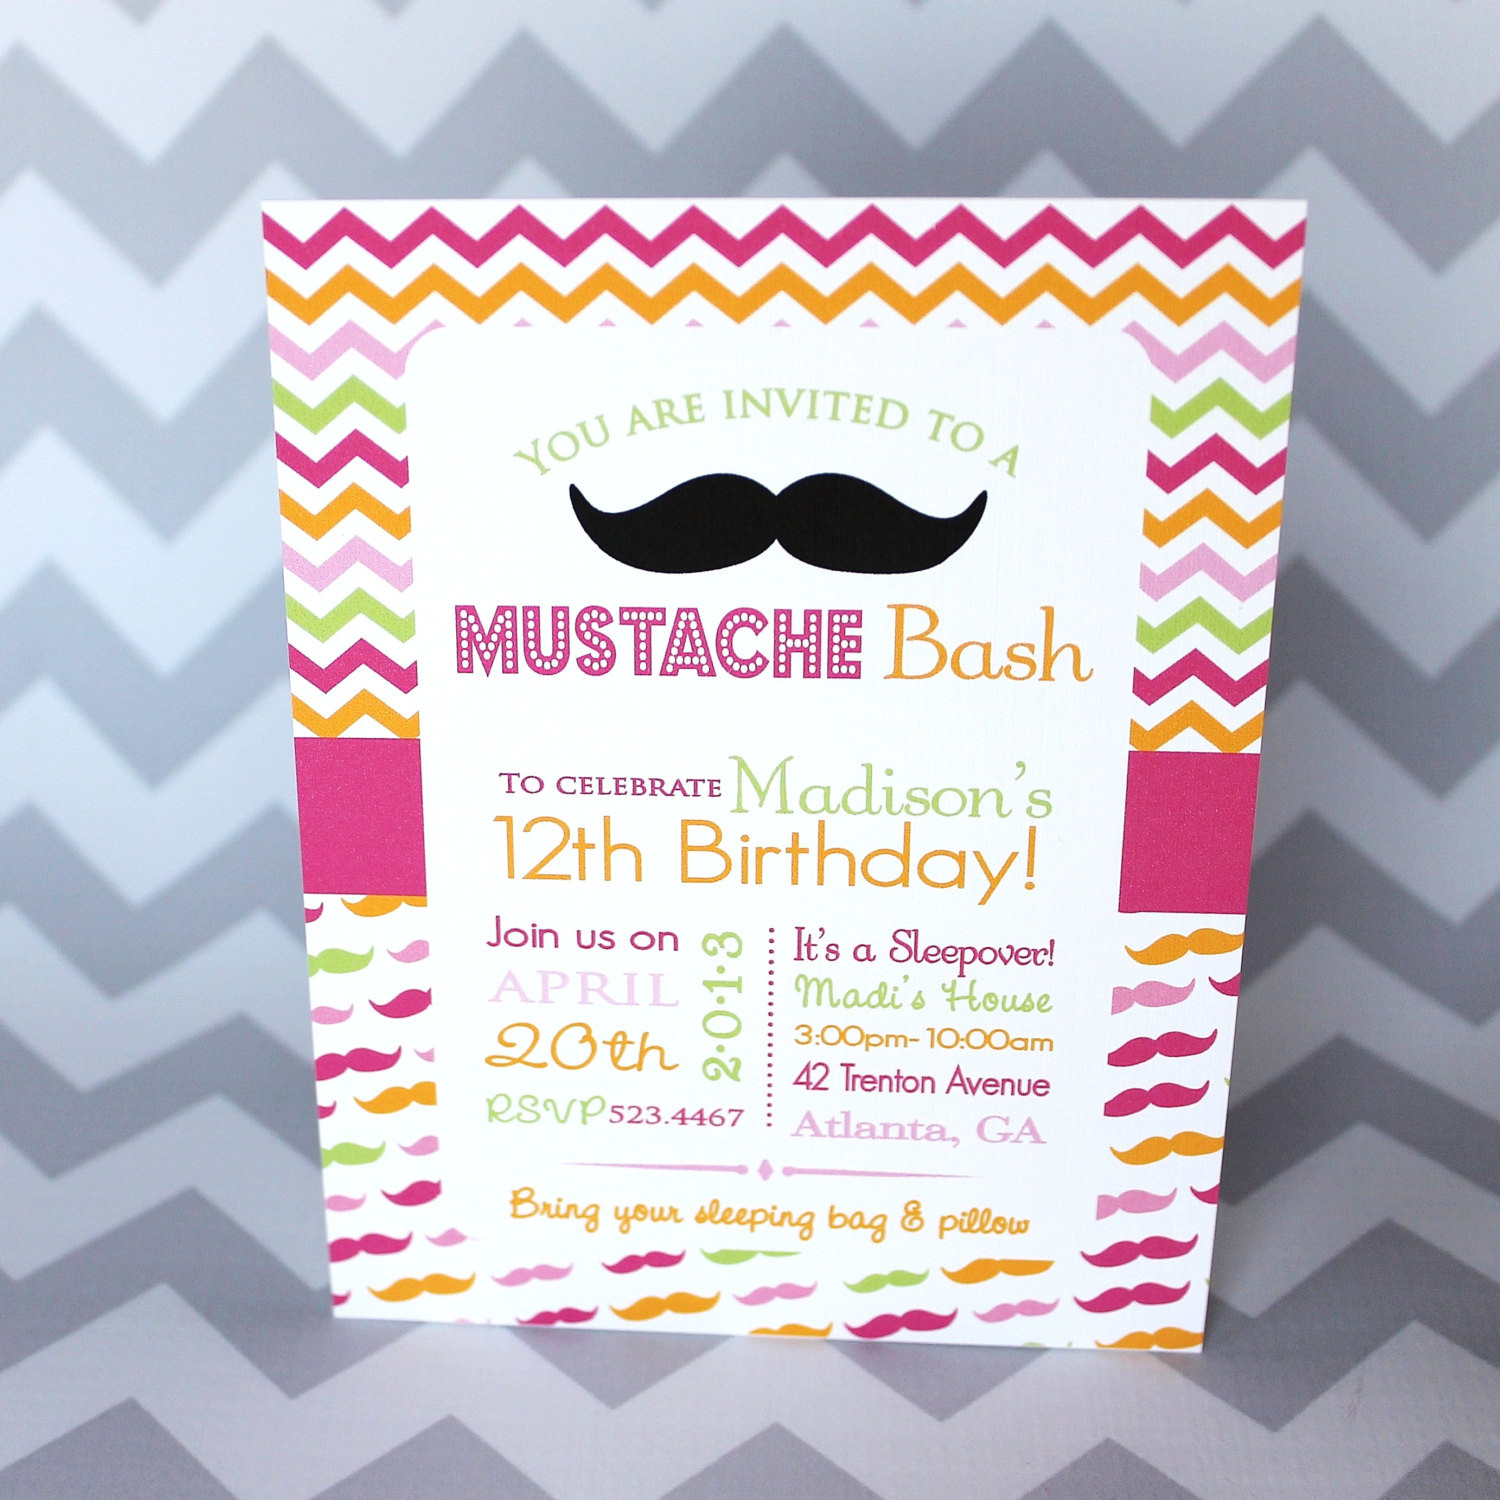 Teenage Birthday Invitations
 Mustache Bash Birthday Invitation Teen Girl by BabycakesArt